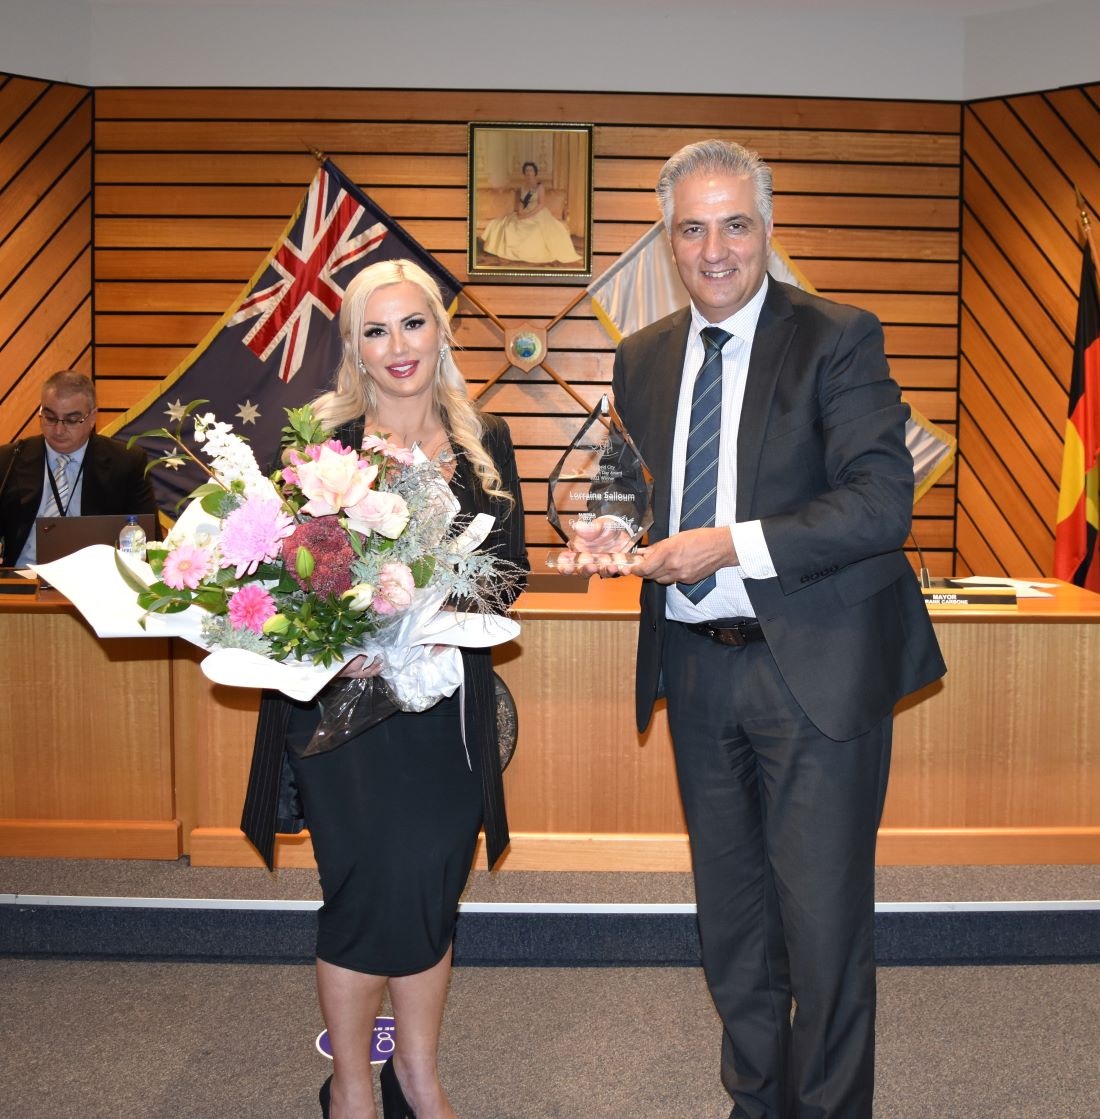 2022 women's day award winner Lorraine Salloum with Mayor Frank Carbone